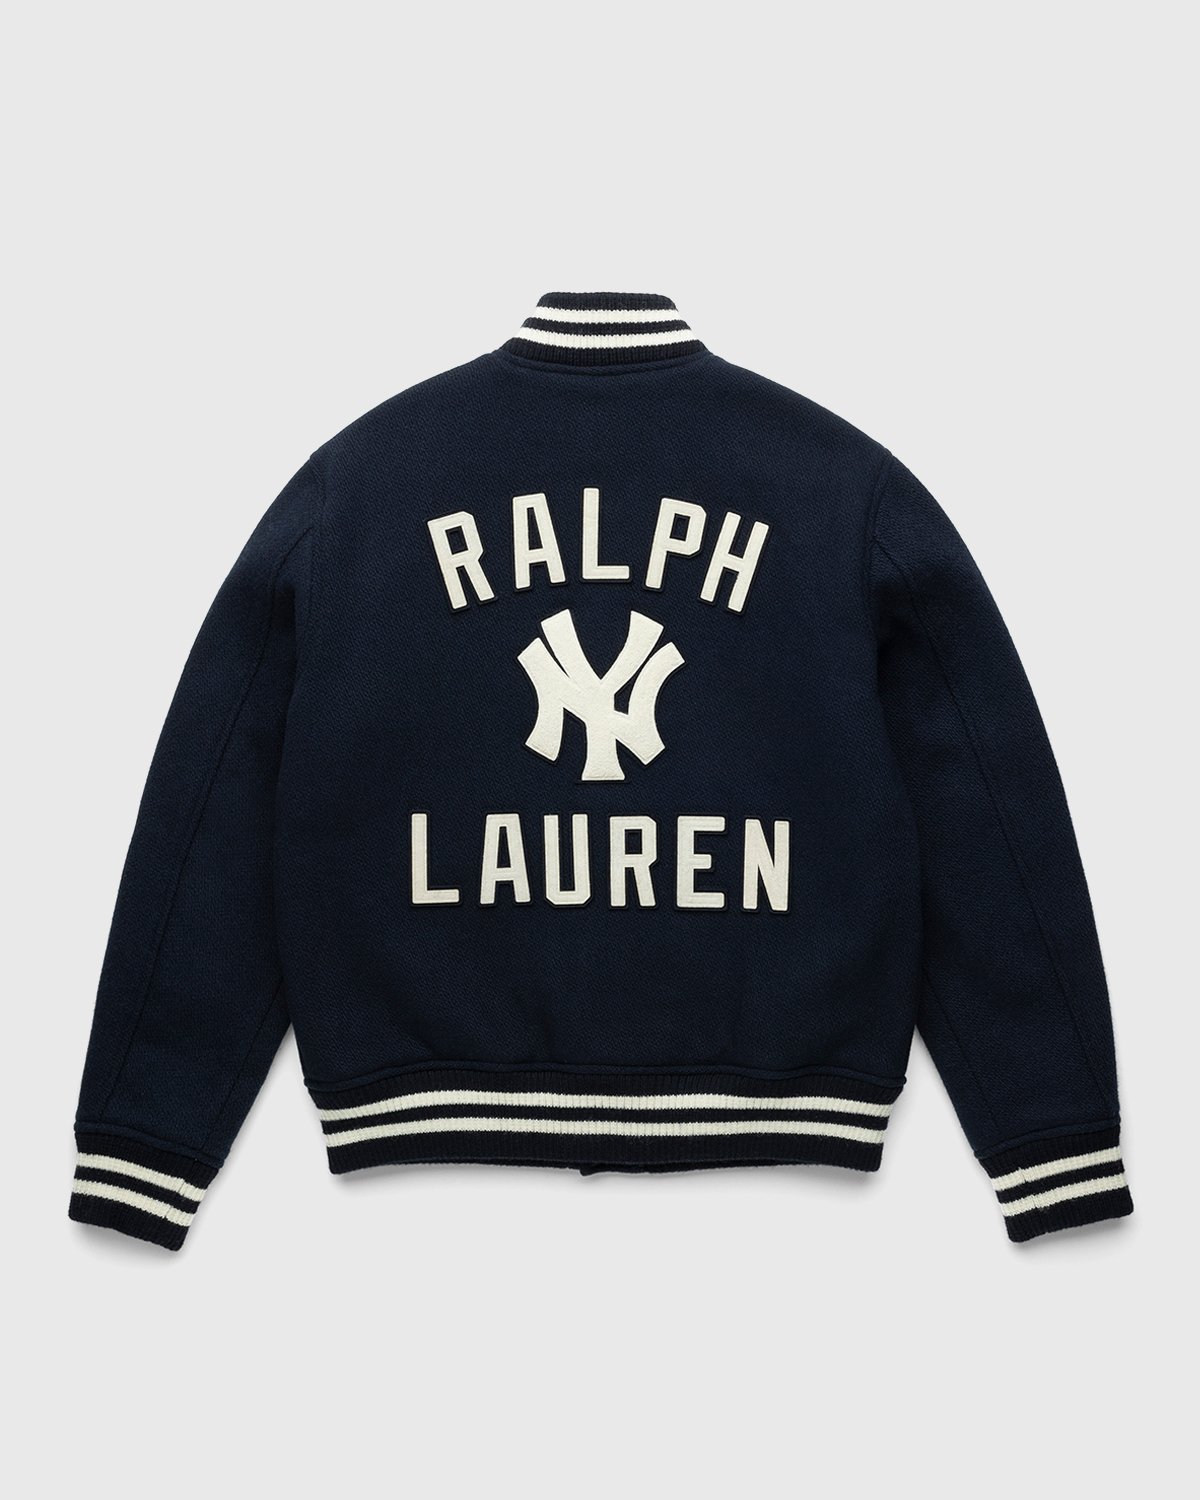 Ralph Lauren - Yankees Jacket Navy - Clothing - Blue - Image 1